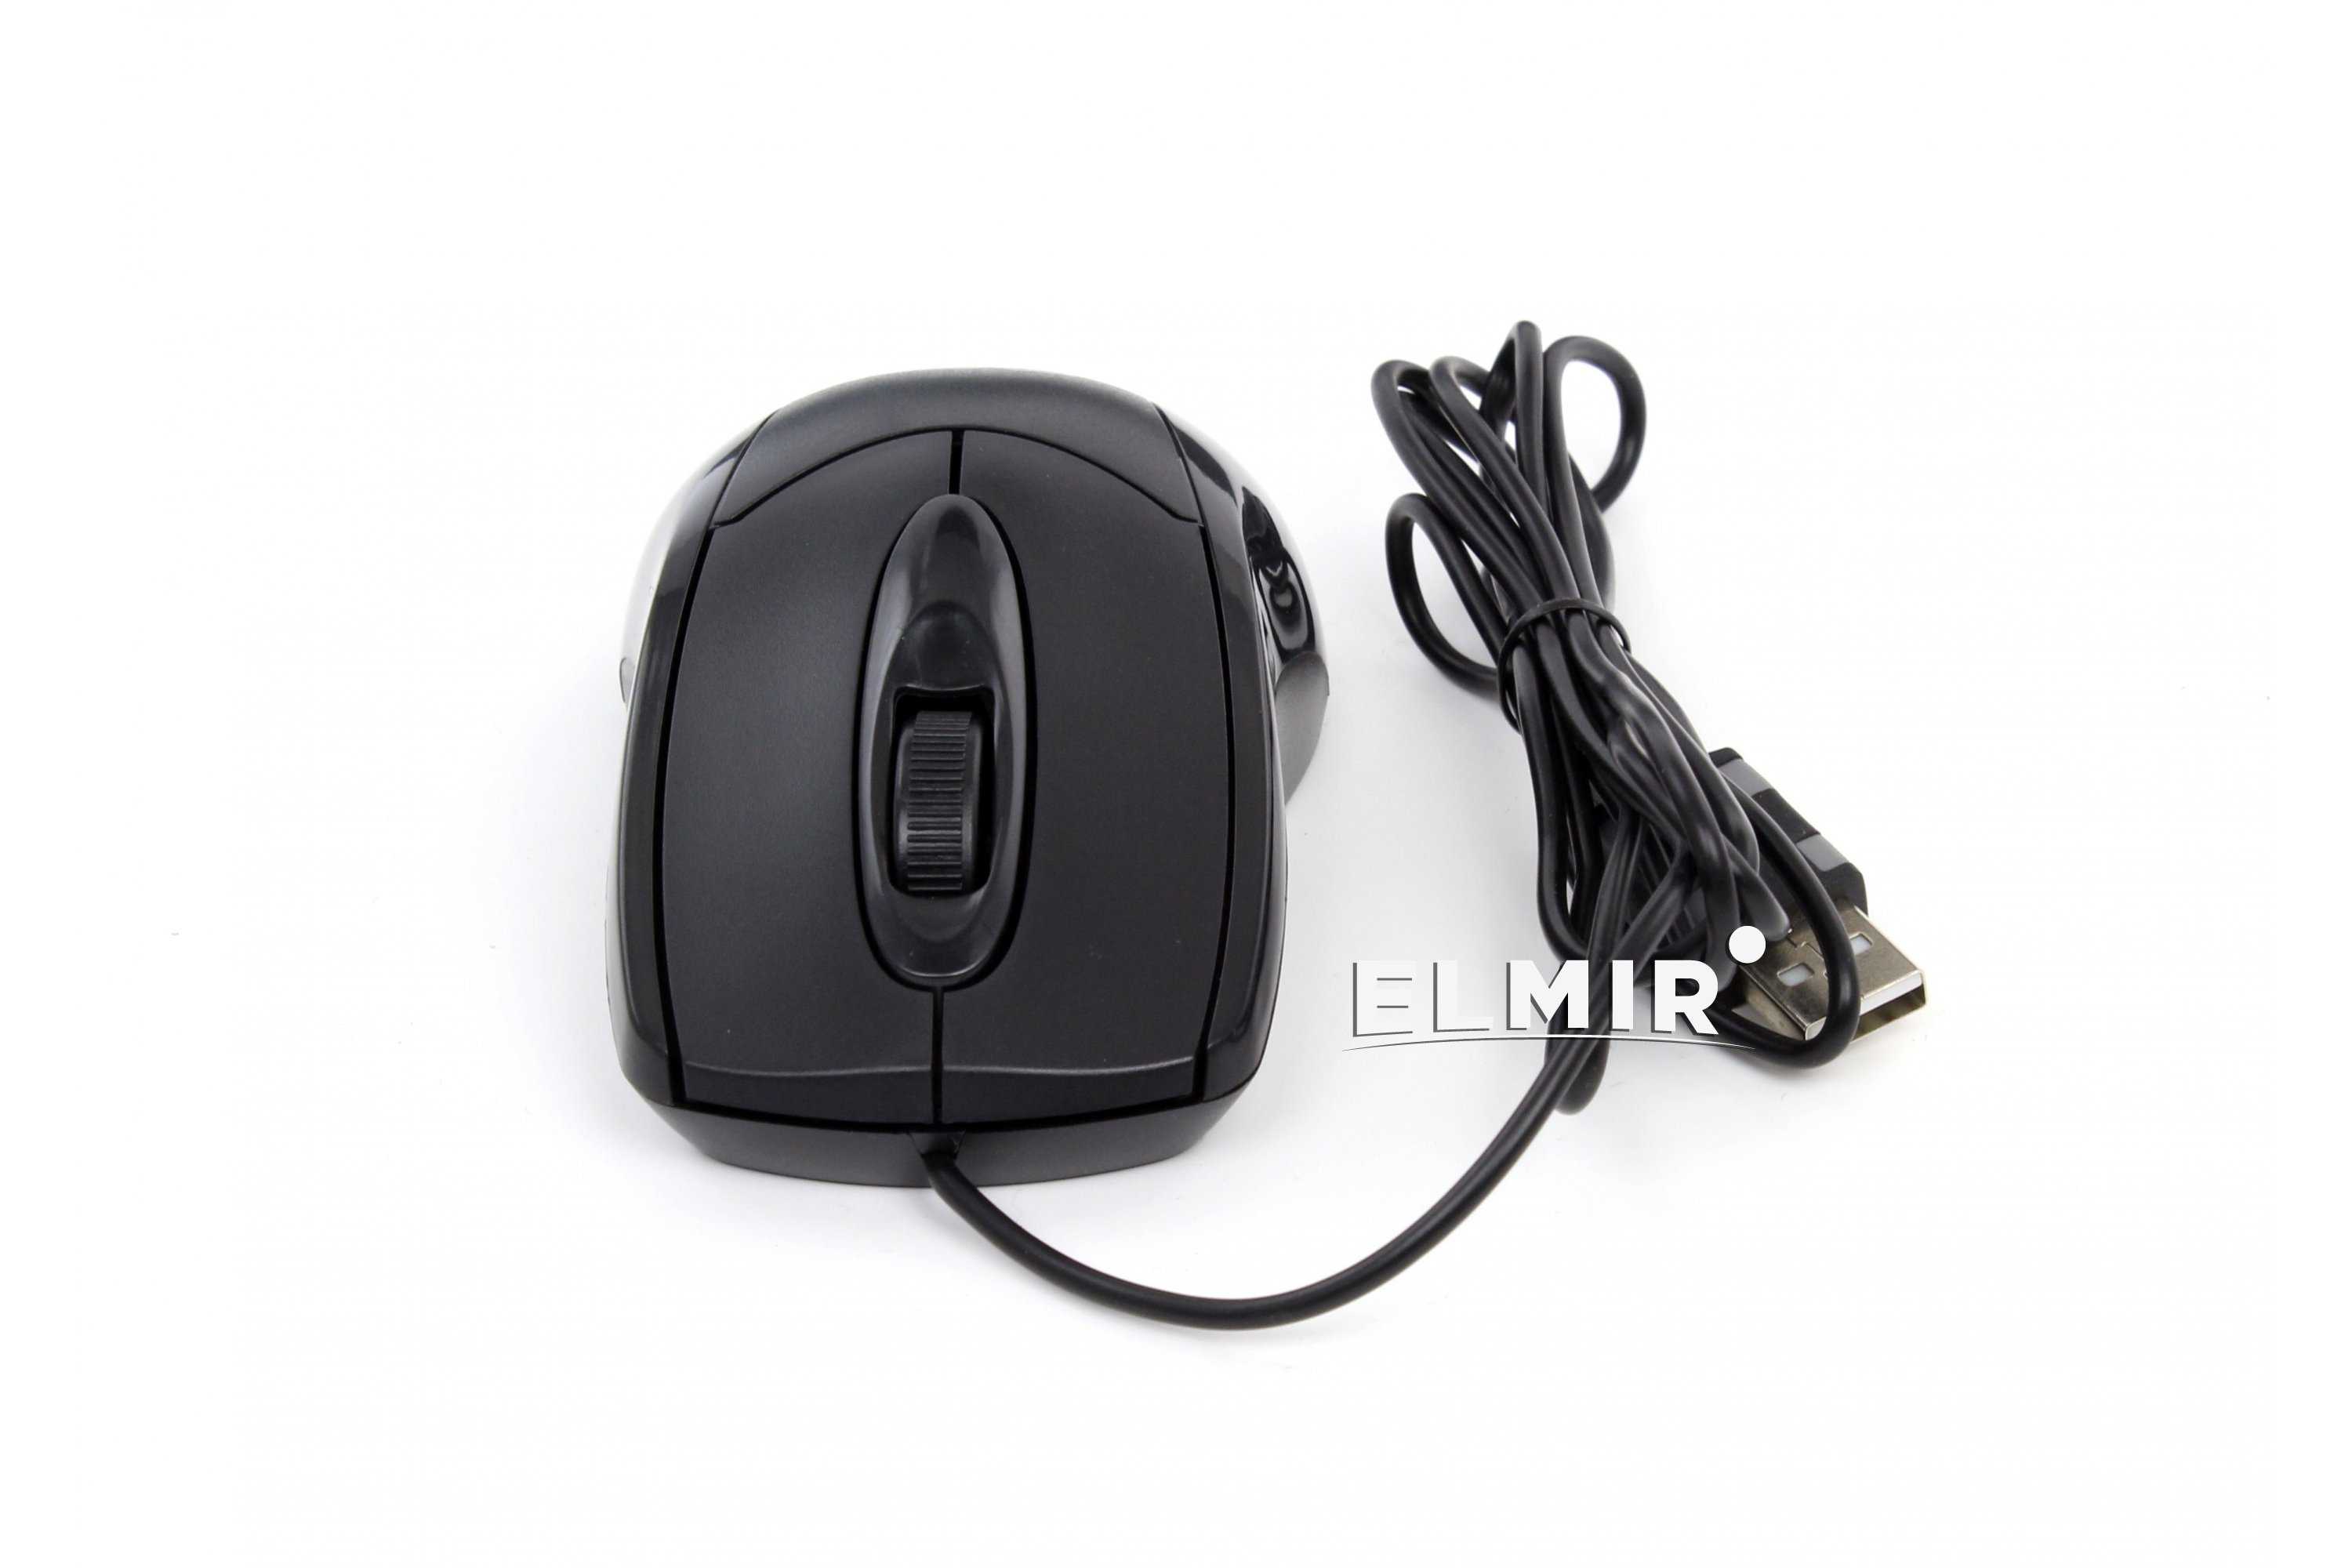 Sven lx-630 wireless black usb - купить , скидки, цена, отзывы, обзор, характеристики - мыши